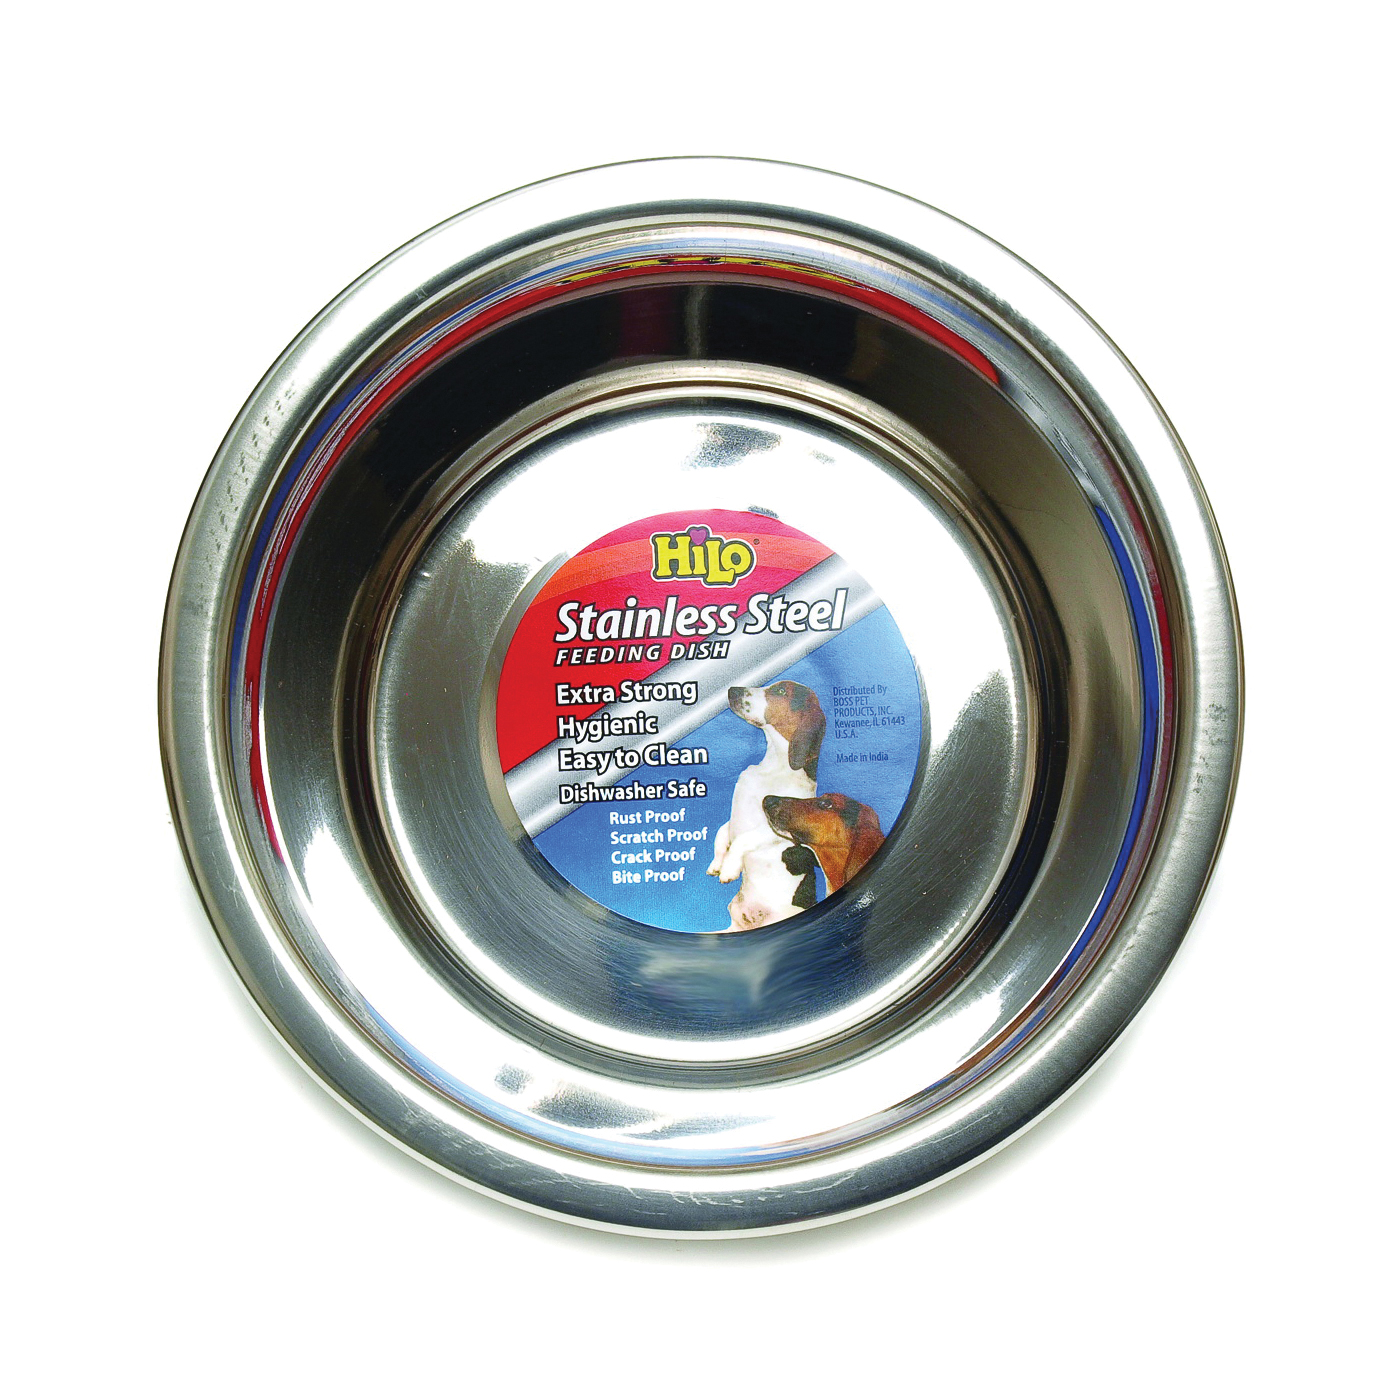 ZW150 32/5661 Pet Feeding Dish, S, 1 qt Volume, Stainless Steel